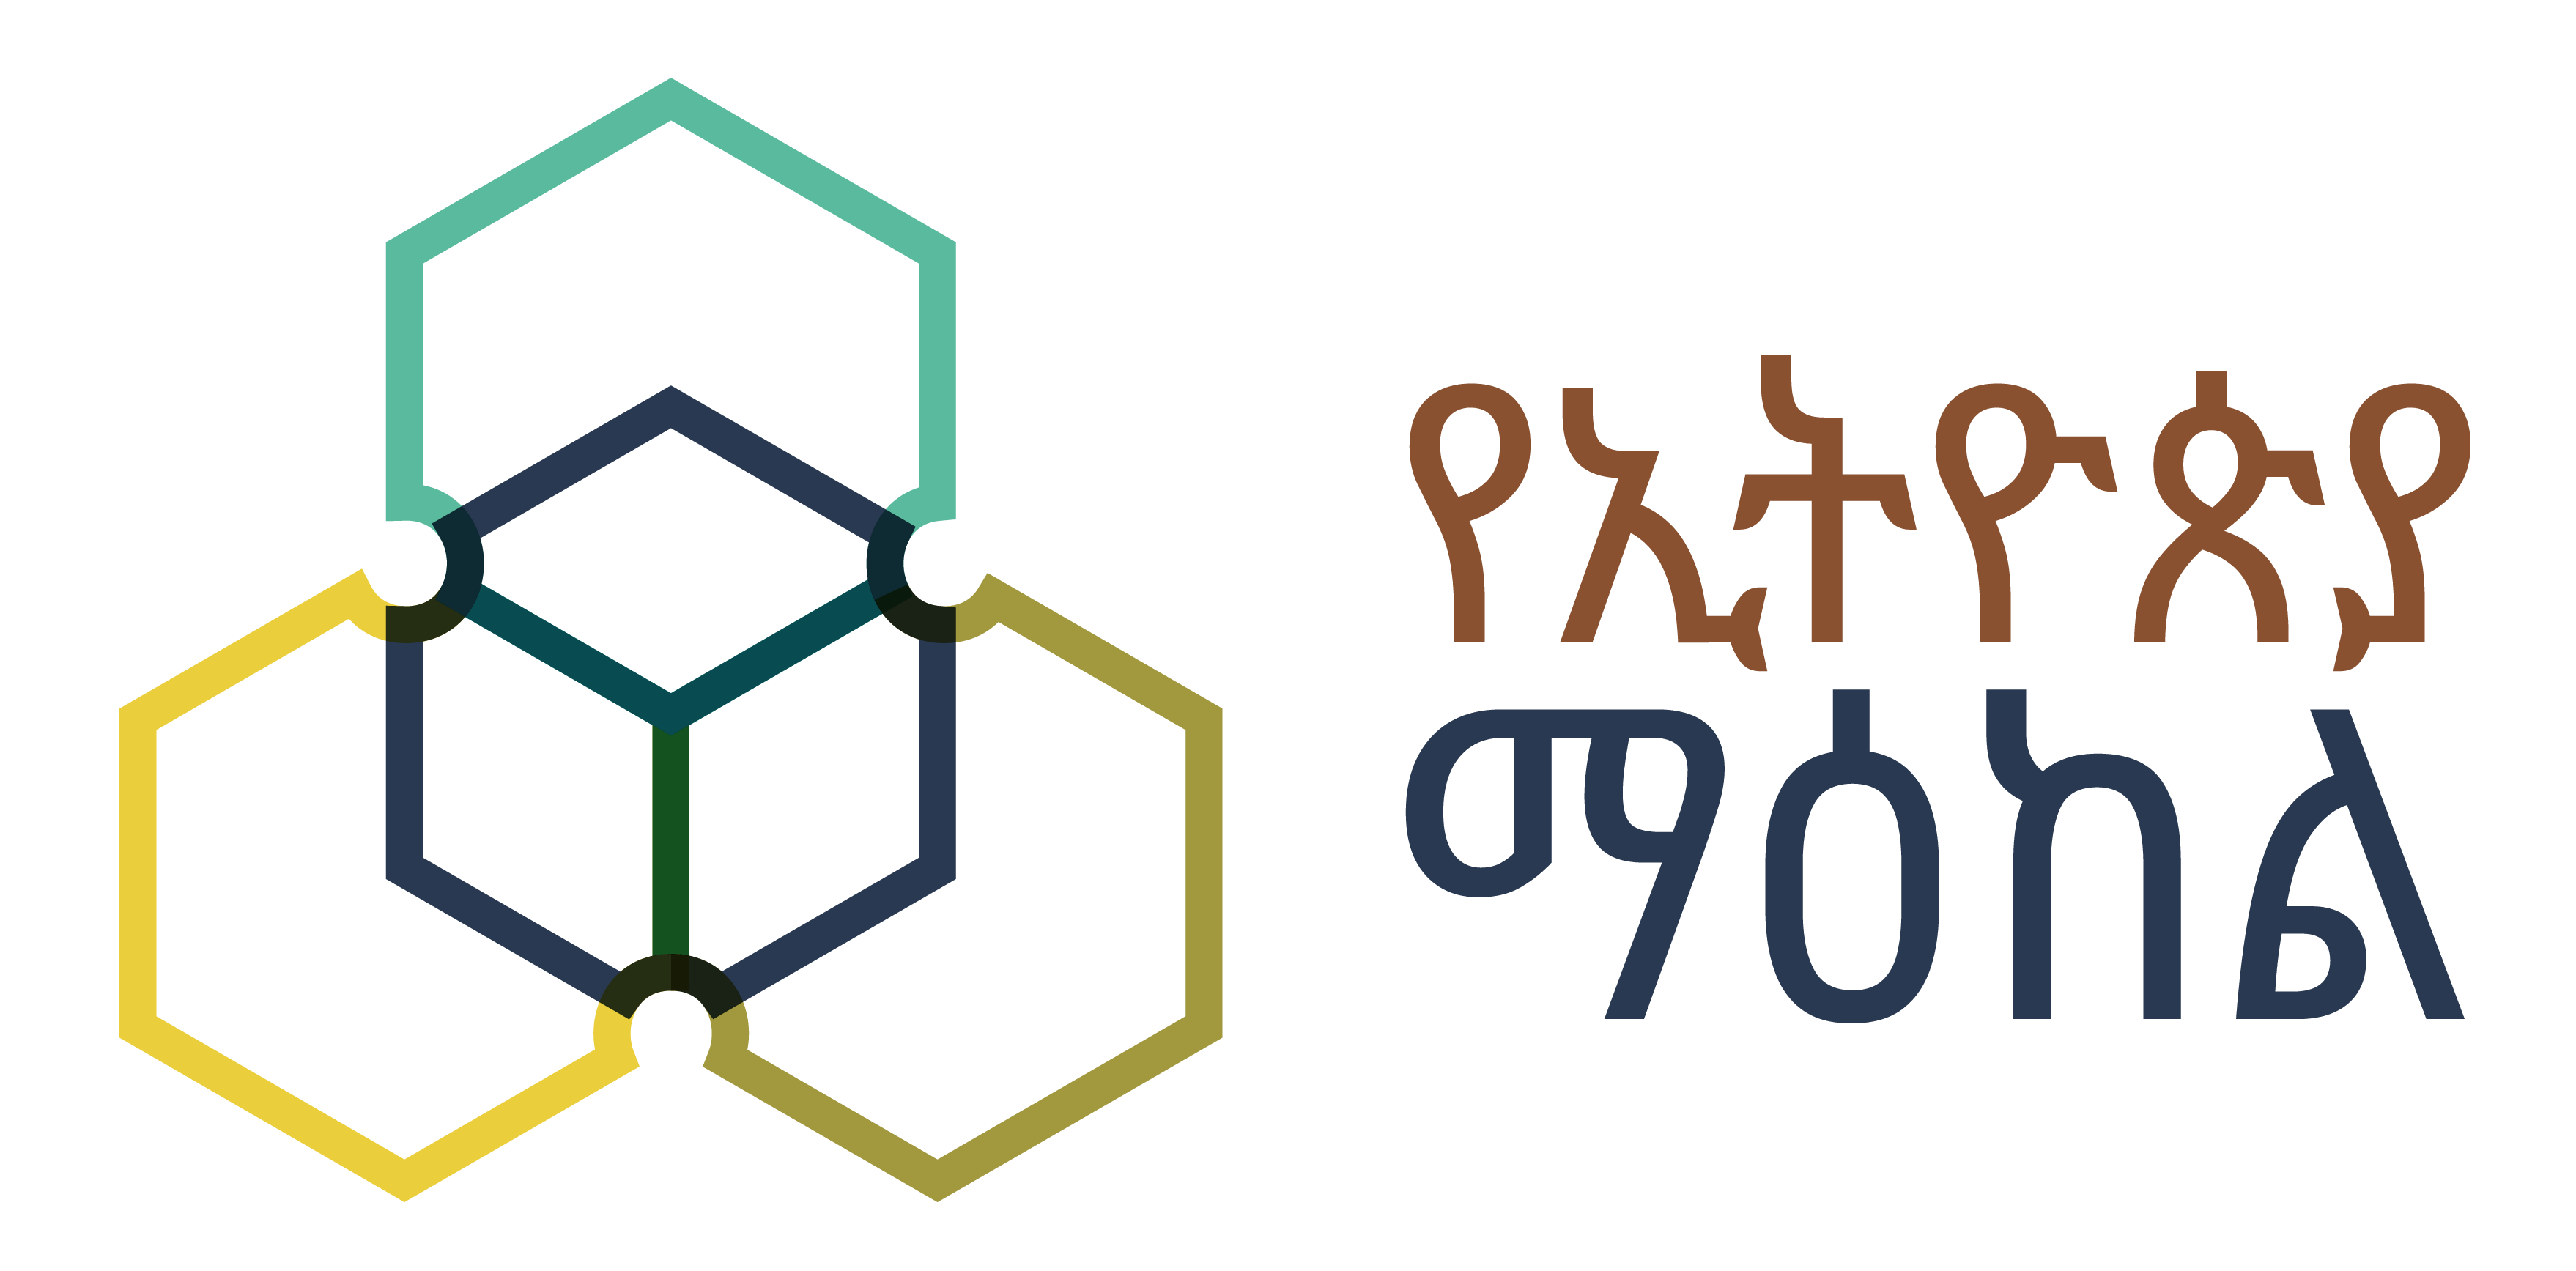 Ethiopia Hub